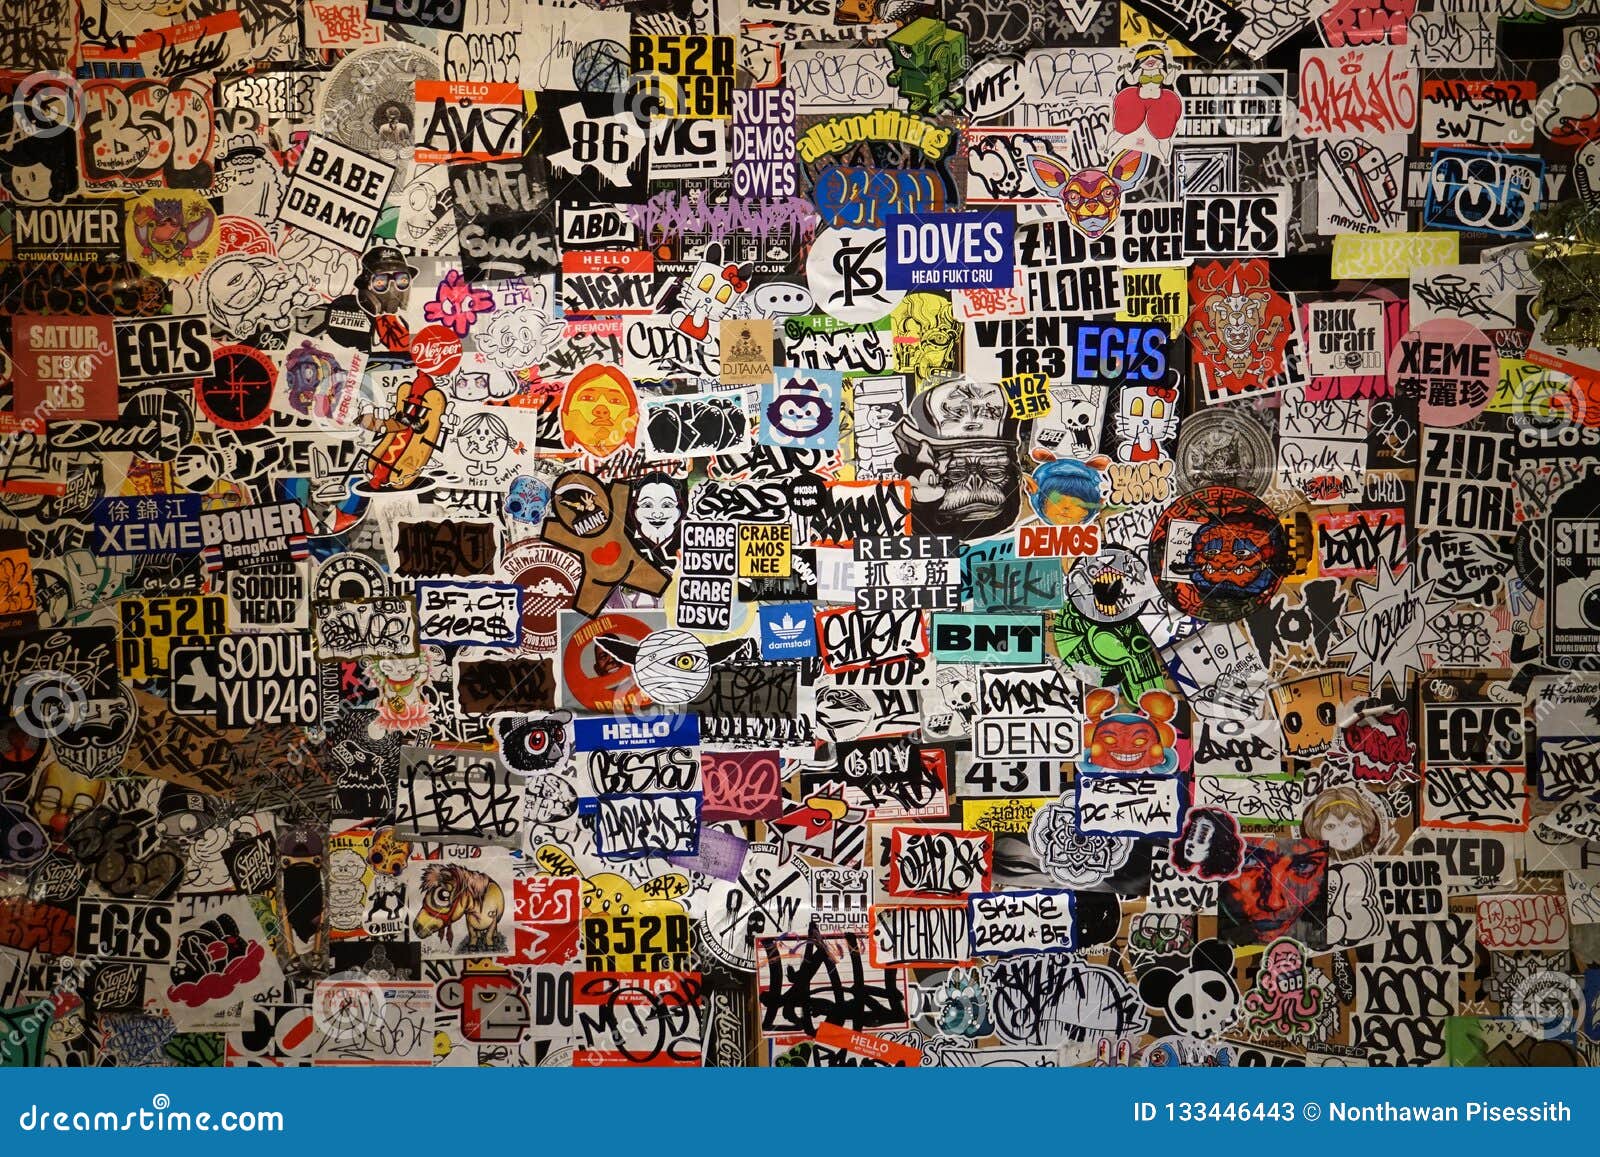 Stickerbomb iOs iPhone 6 Wallpaper by brandONholsey on DeviantArt